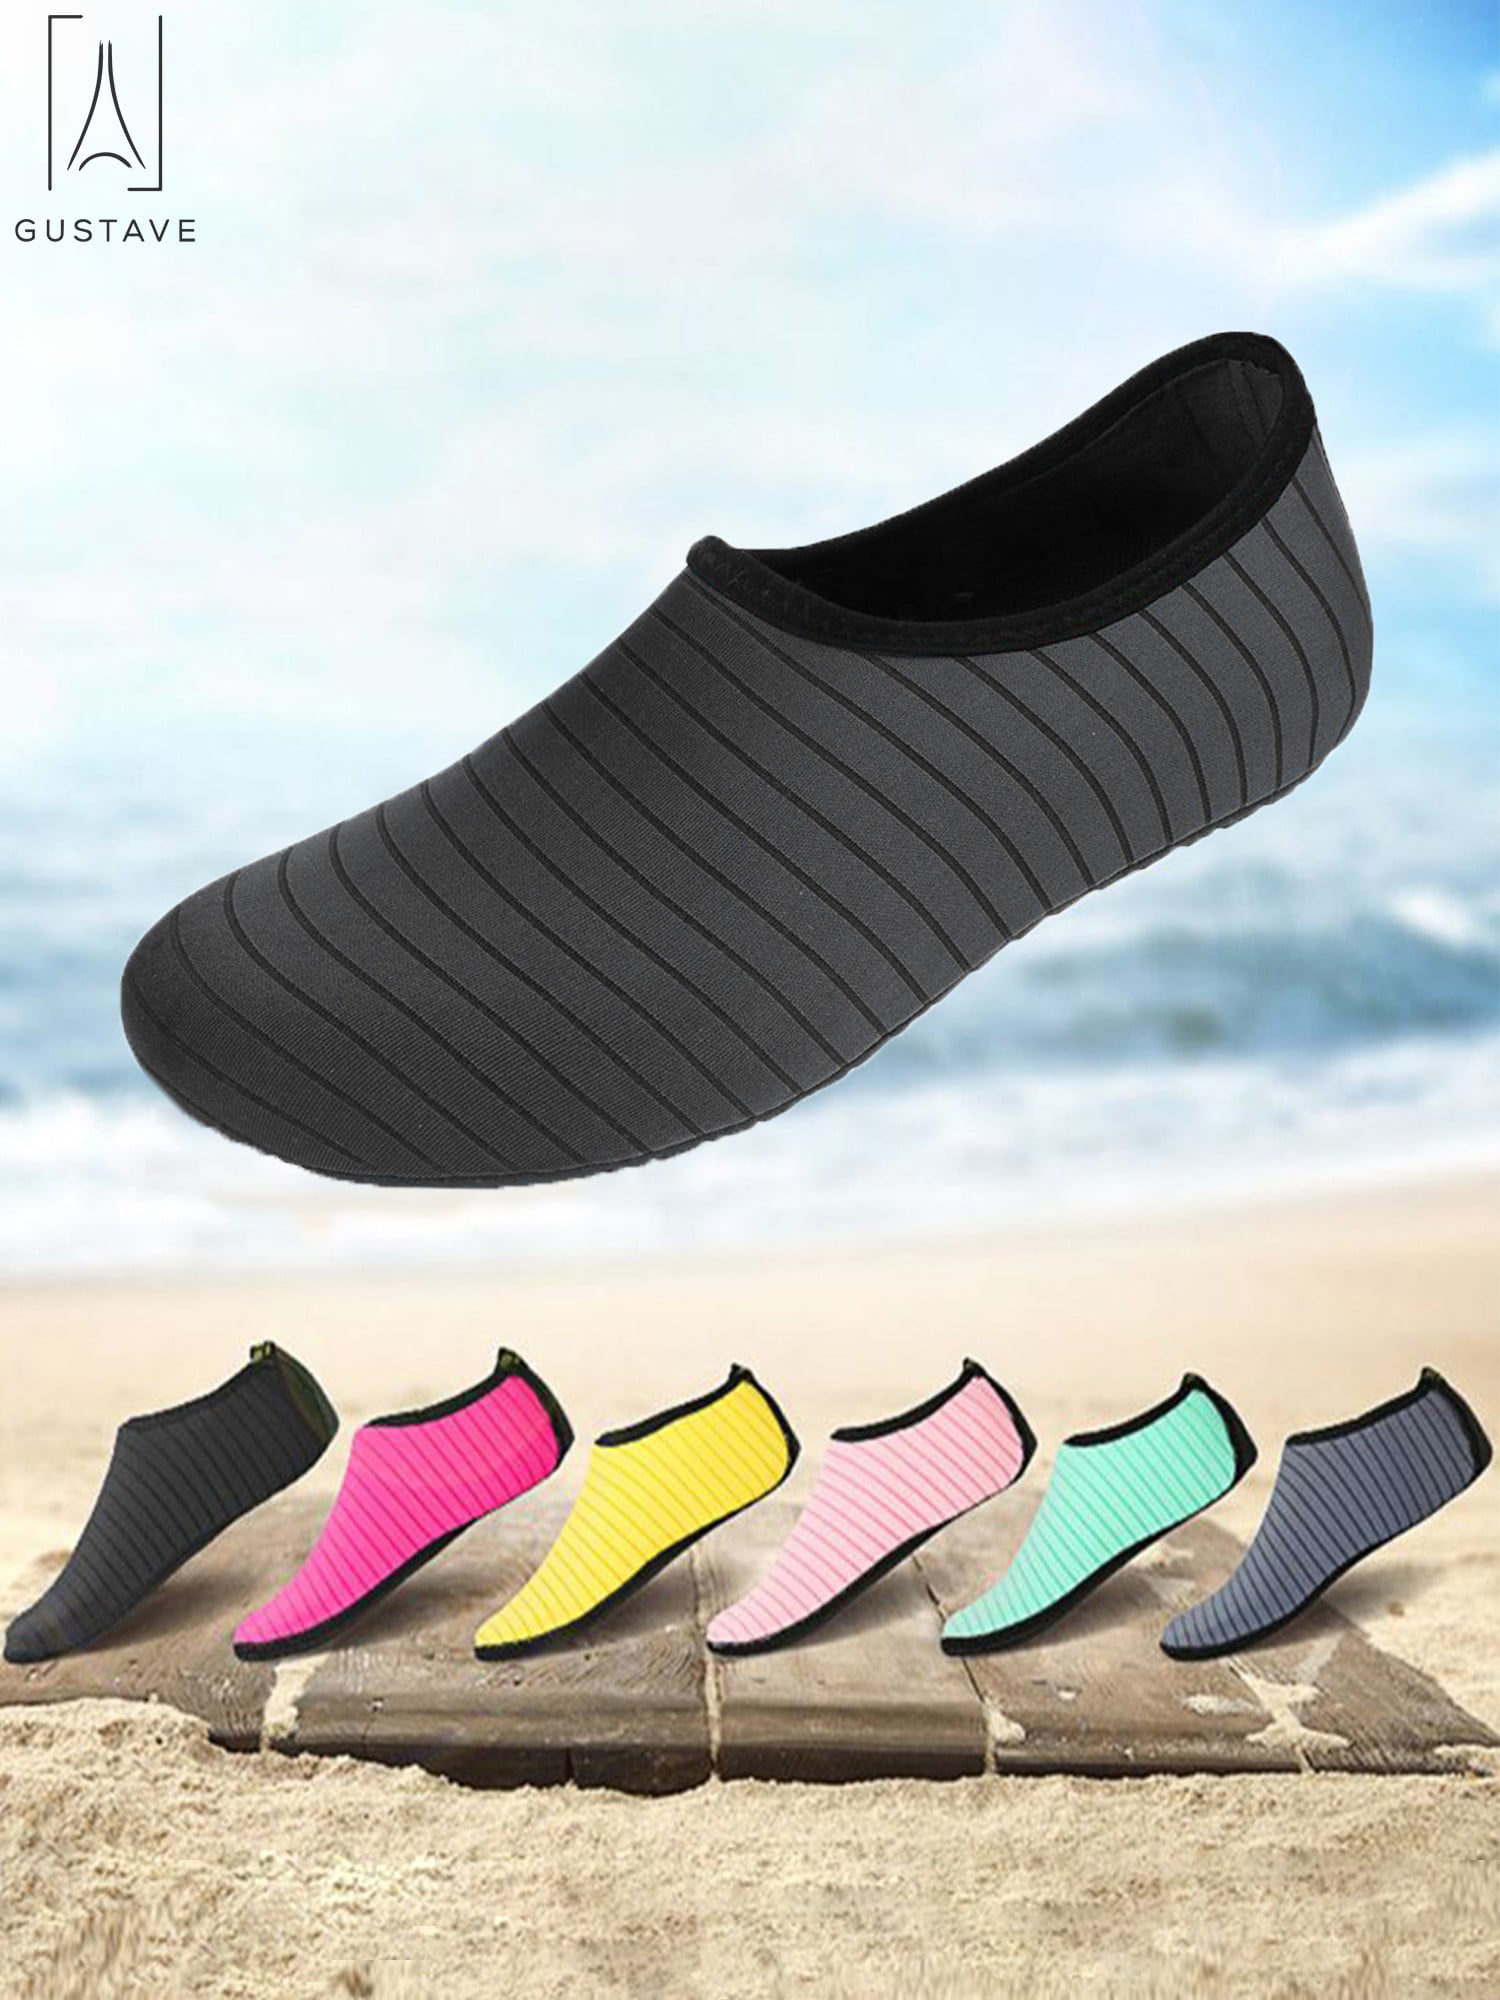 Profusion Circle Unisex Water Socks Non-Slip Barefoot Skin Shoes Beach Surfing Diving Swimming Pool Yoga Socks for Men Women 